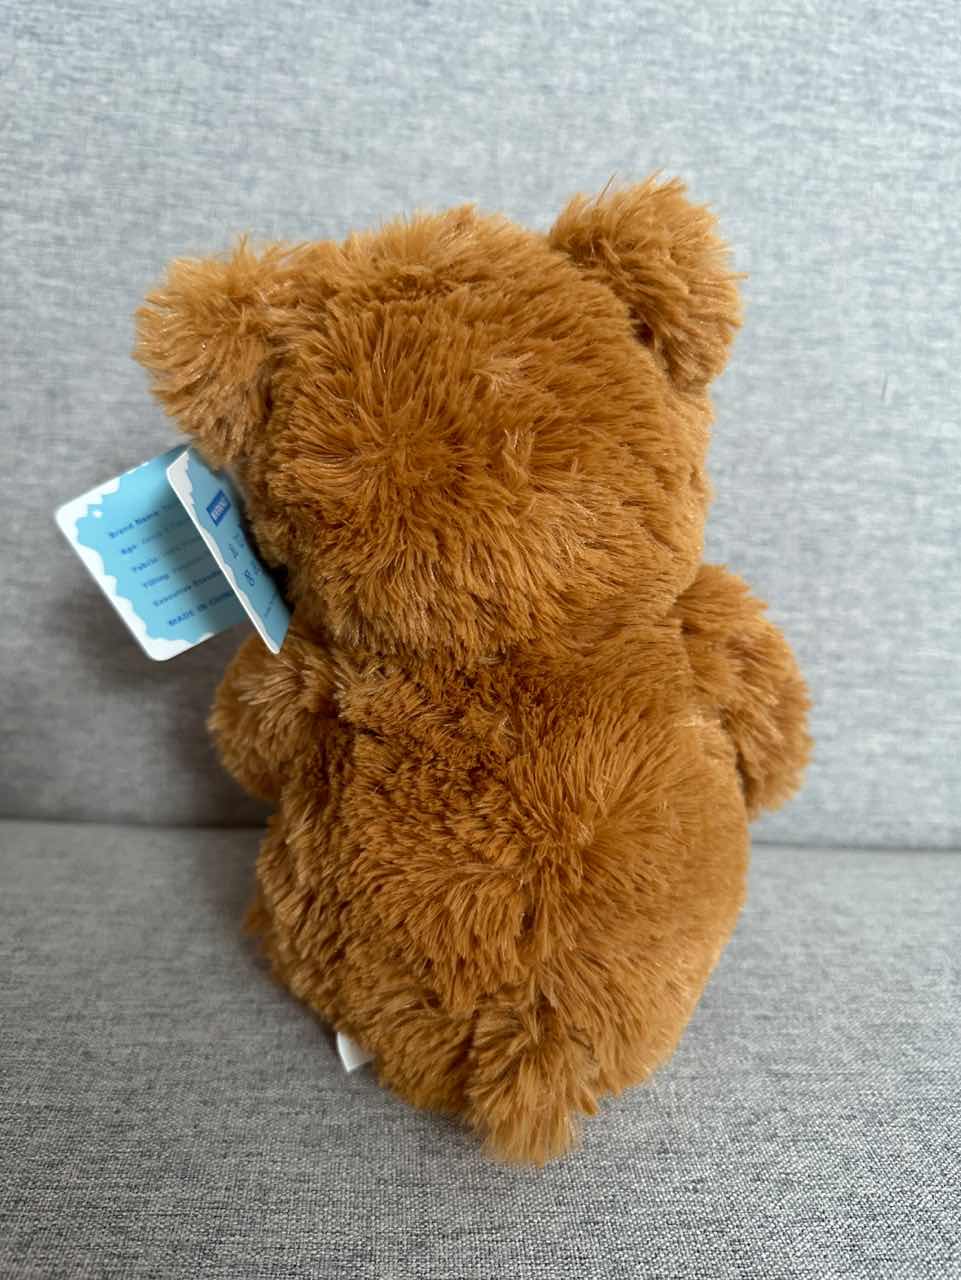 Azdreic Stuffed Toy Bears Teddy Bear Plush Toy, Brown